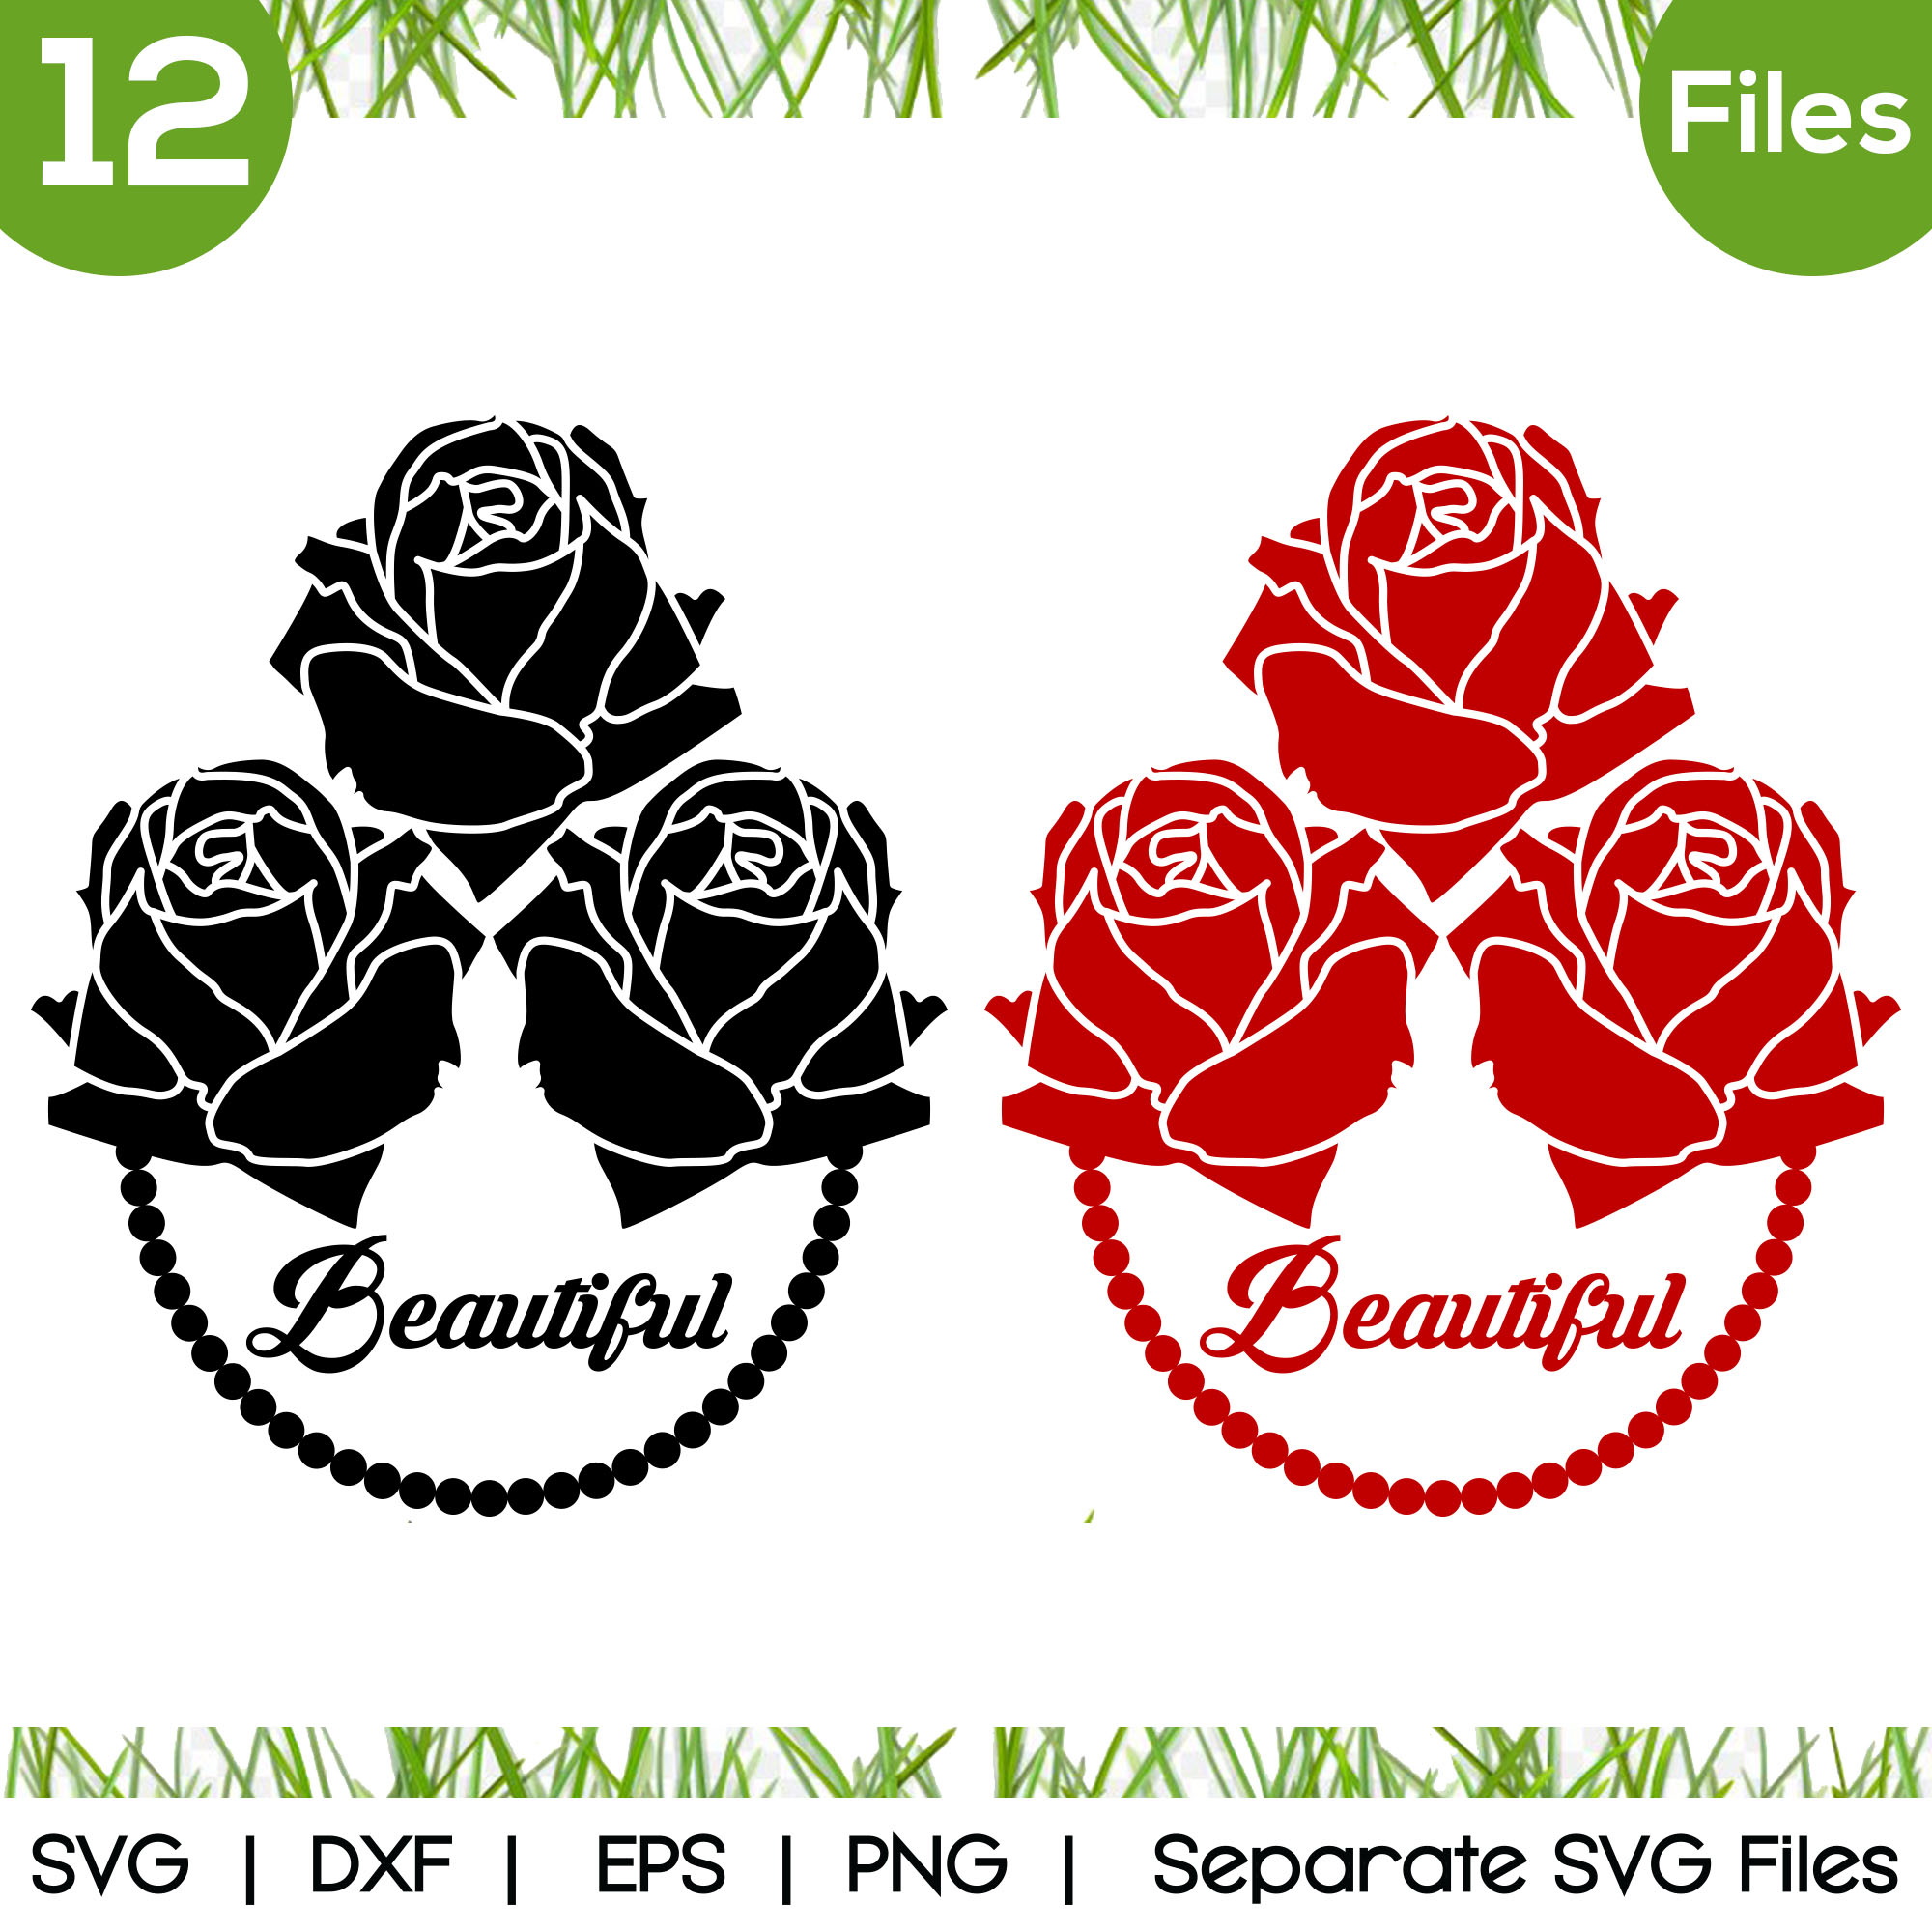 Rose SVG Free Cut File PNG DXF EPS-Rose SVG Free